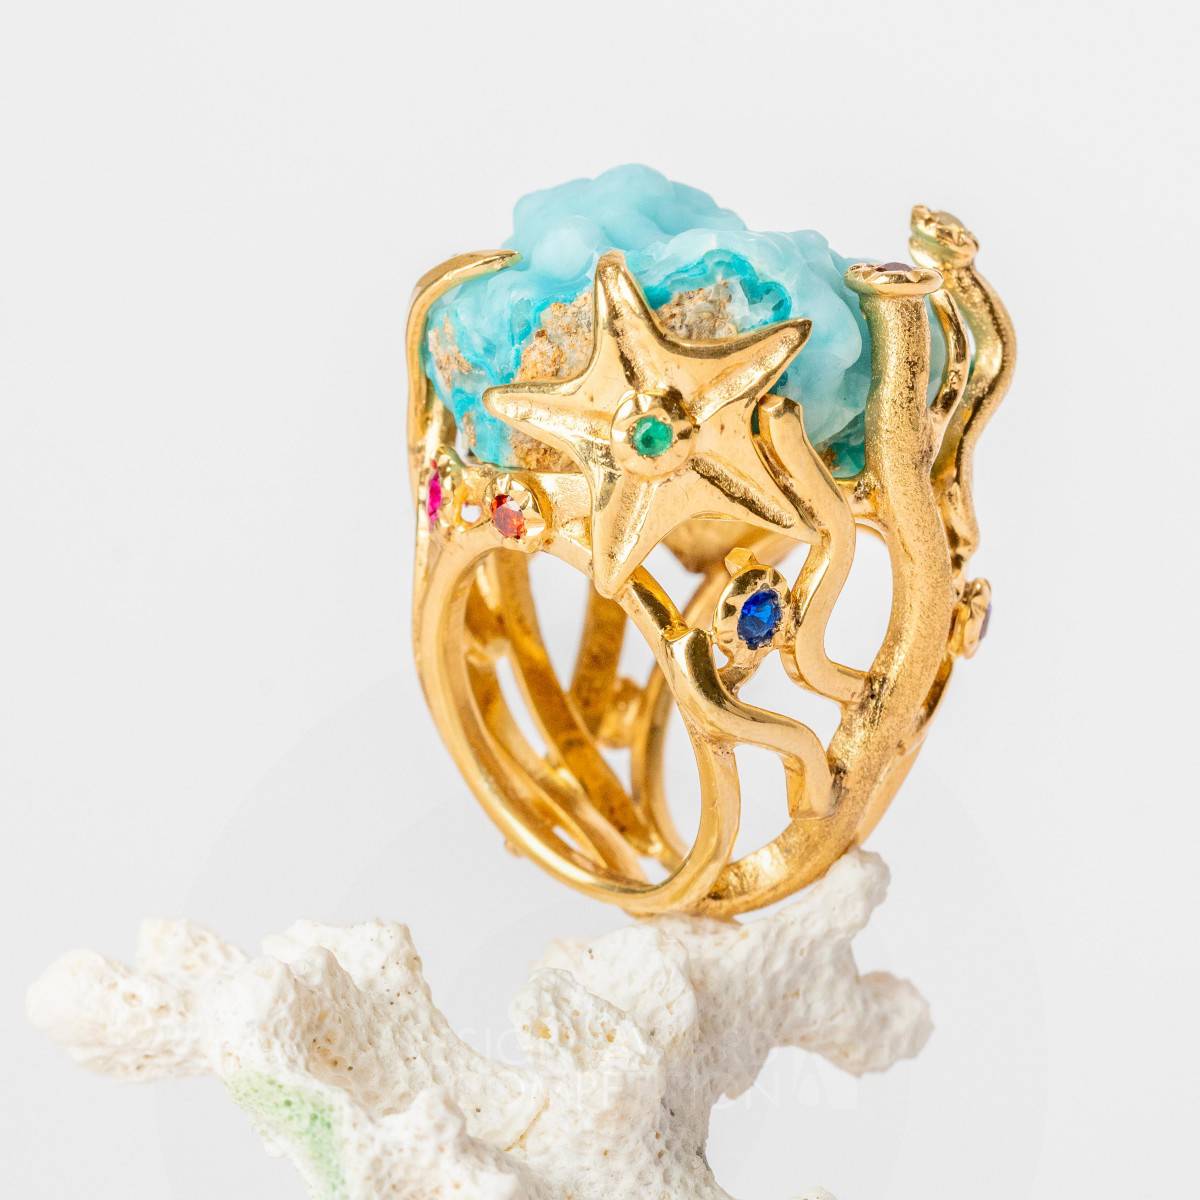 The Bottom Ring by Sanda Strugar Bronze Jewelry Design Award Winner 2024 